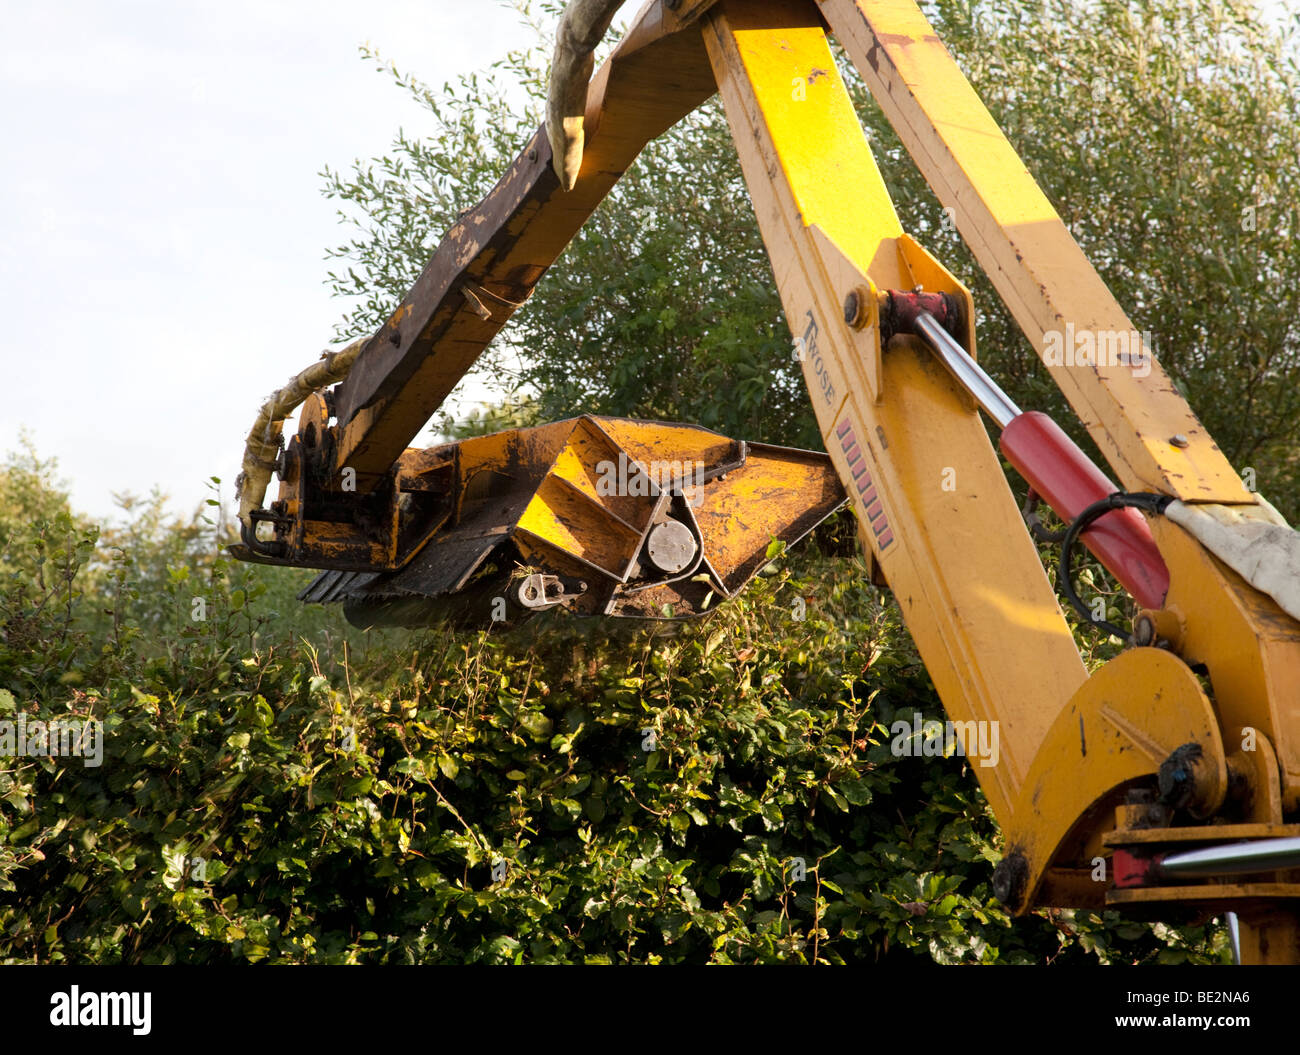 Hedge cutting with large machinery Ireland Stock Photo